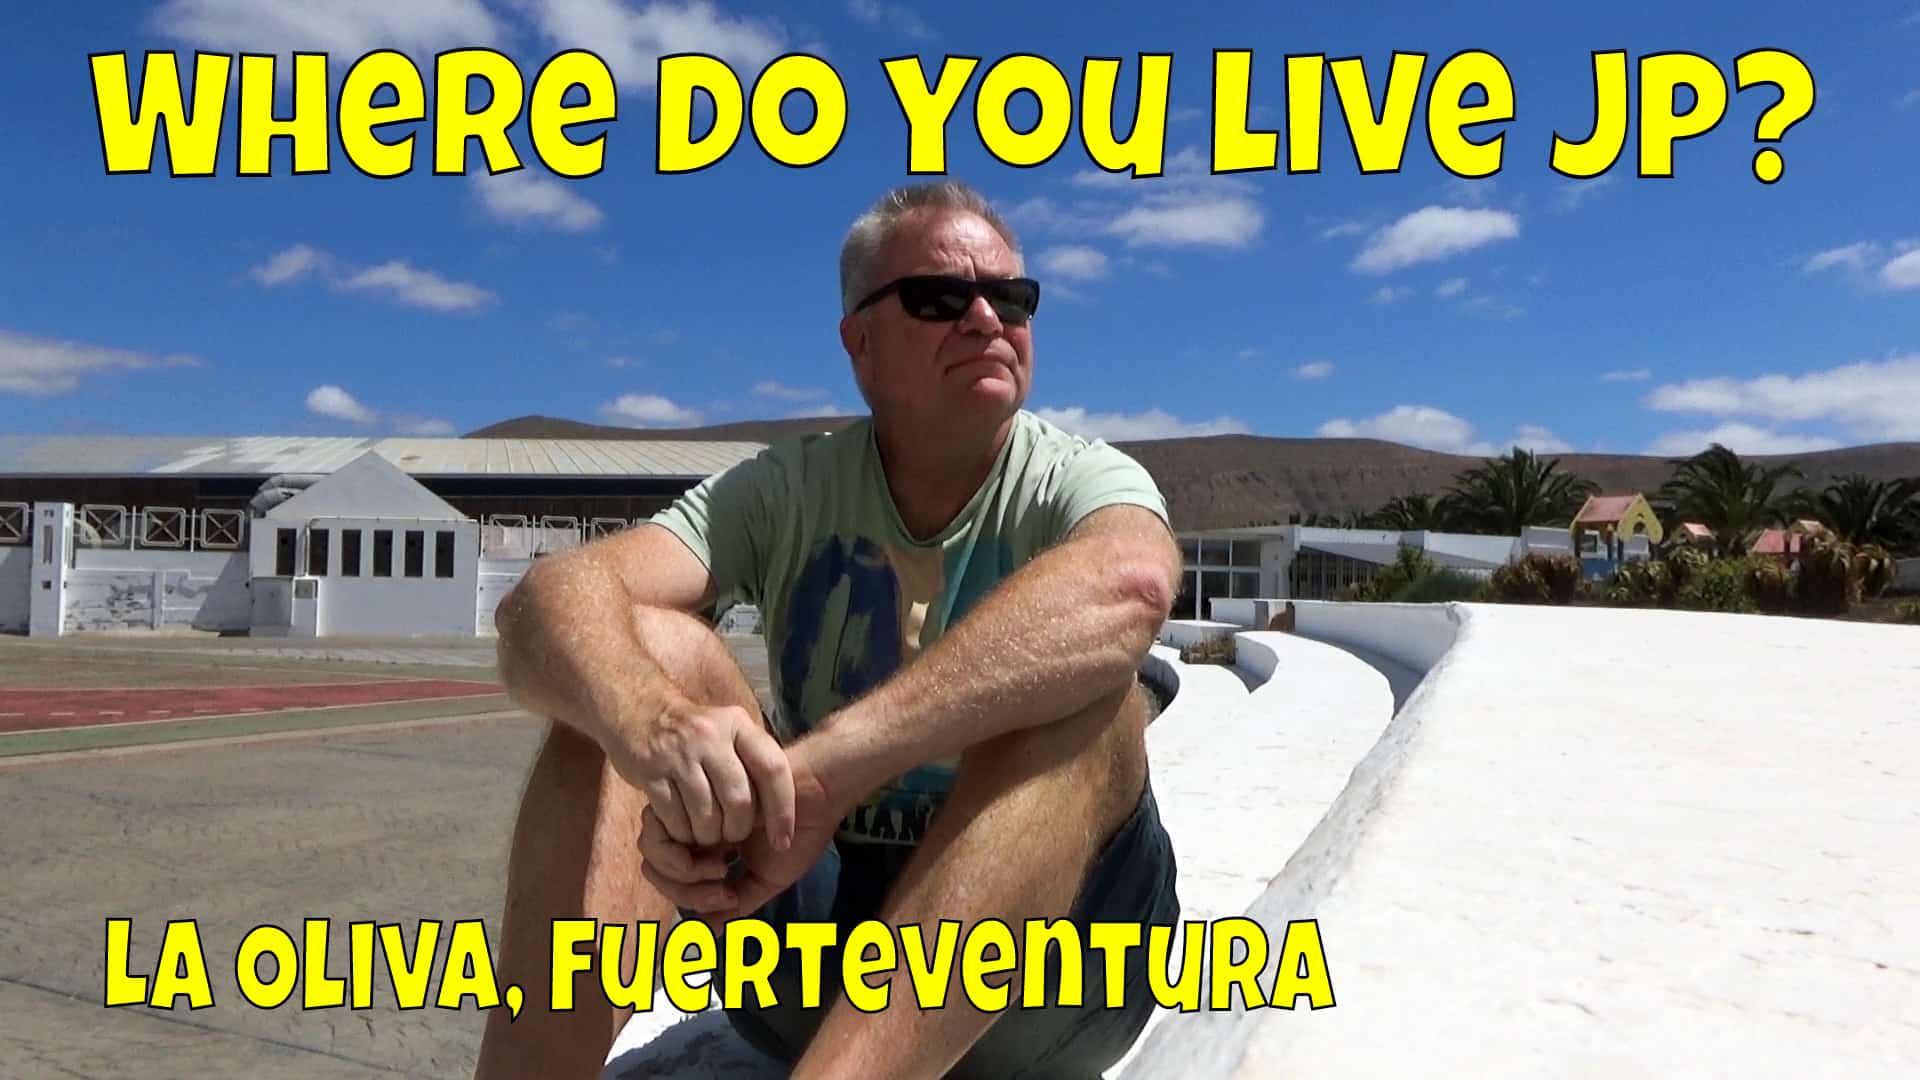 Where to live in Fuerteventura - La Oliva Fuerteventura